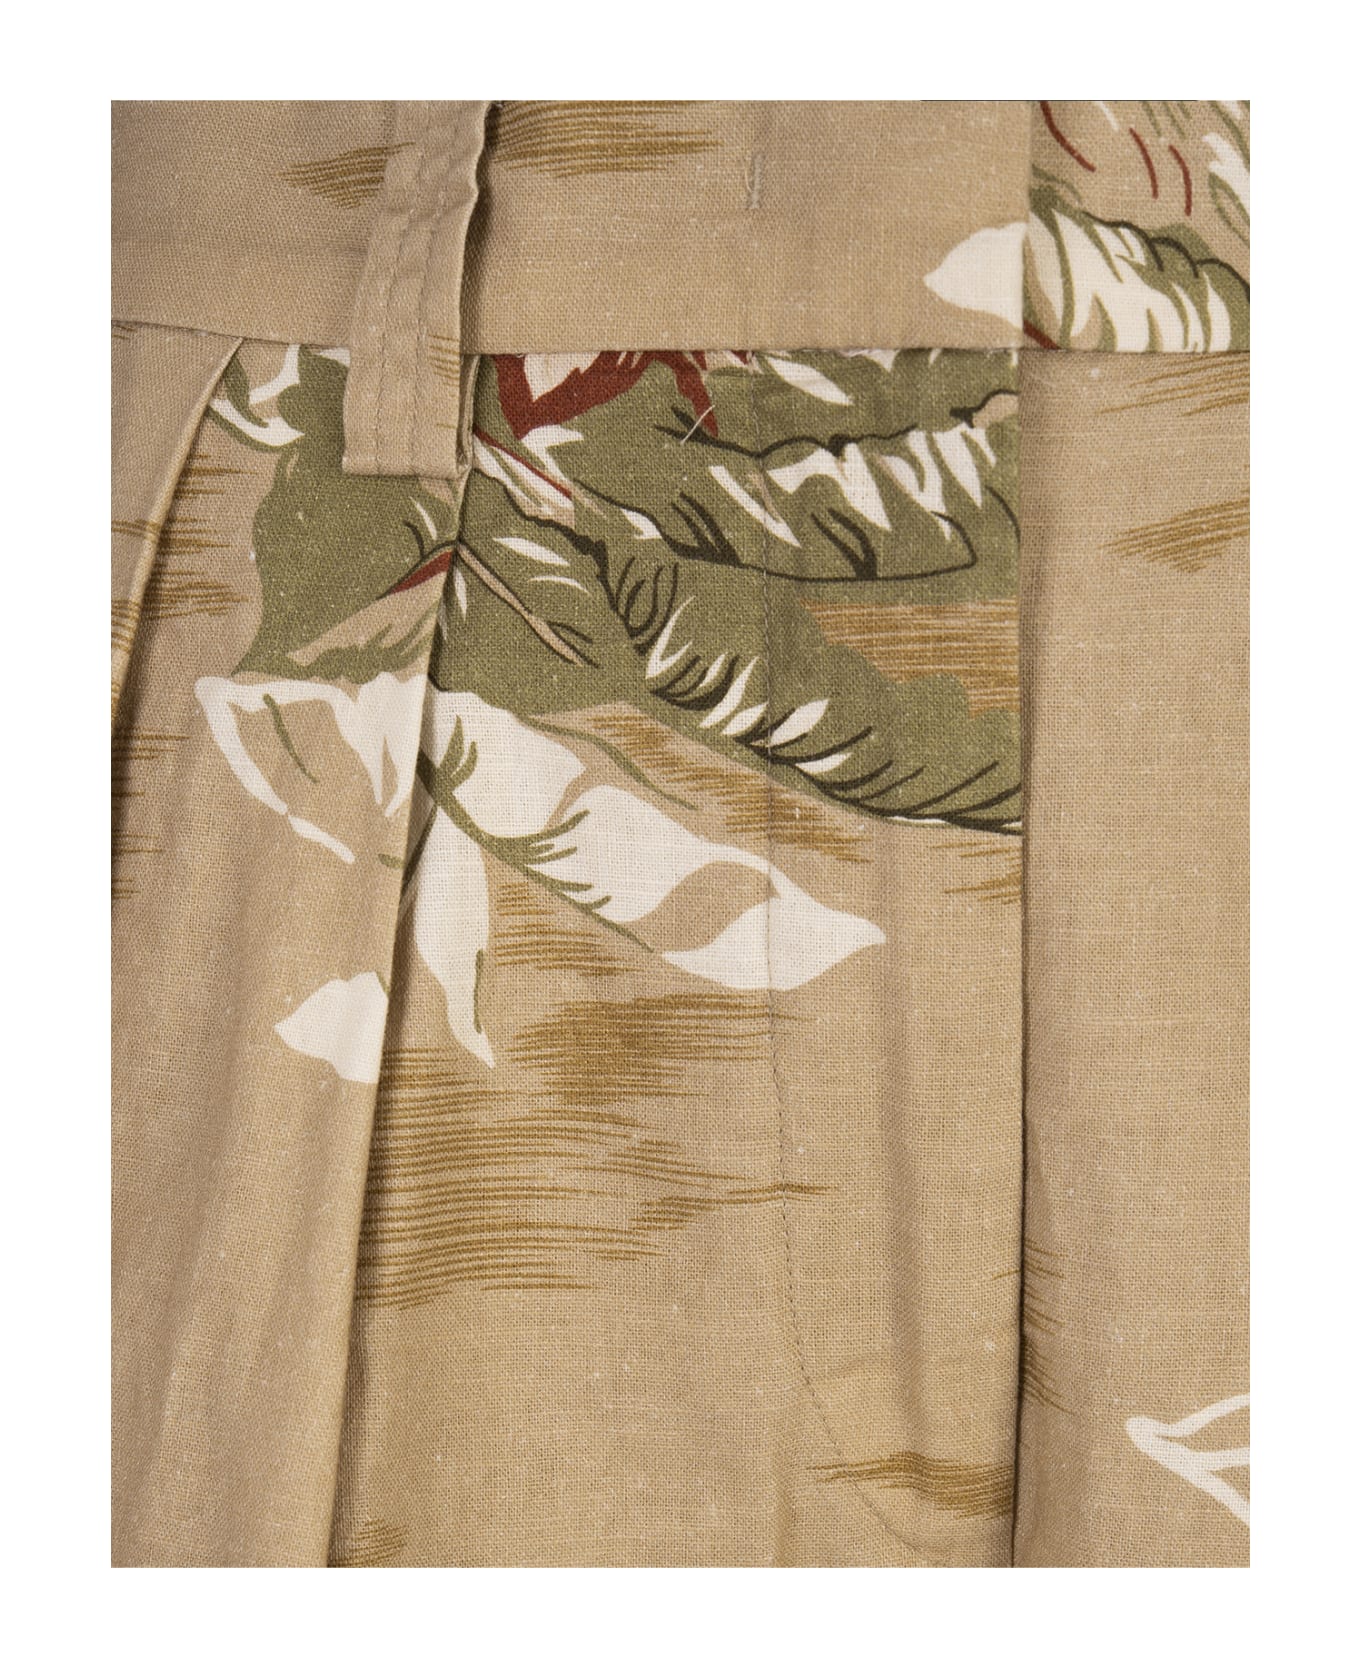 Aspesi Cotton And Linen Bermuda Shorts - Brown